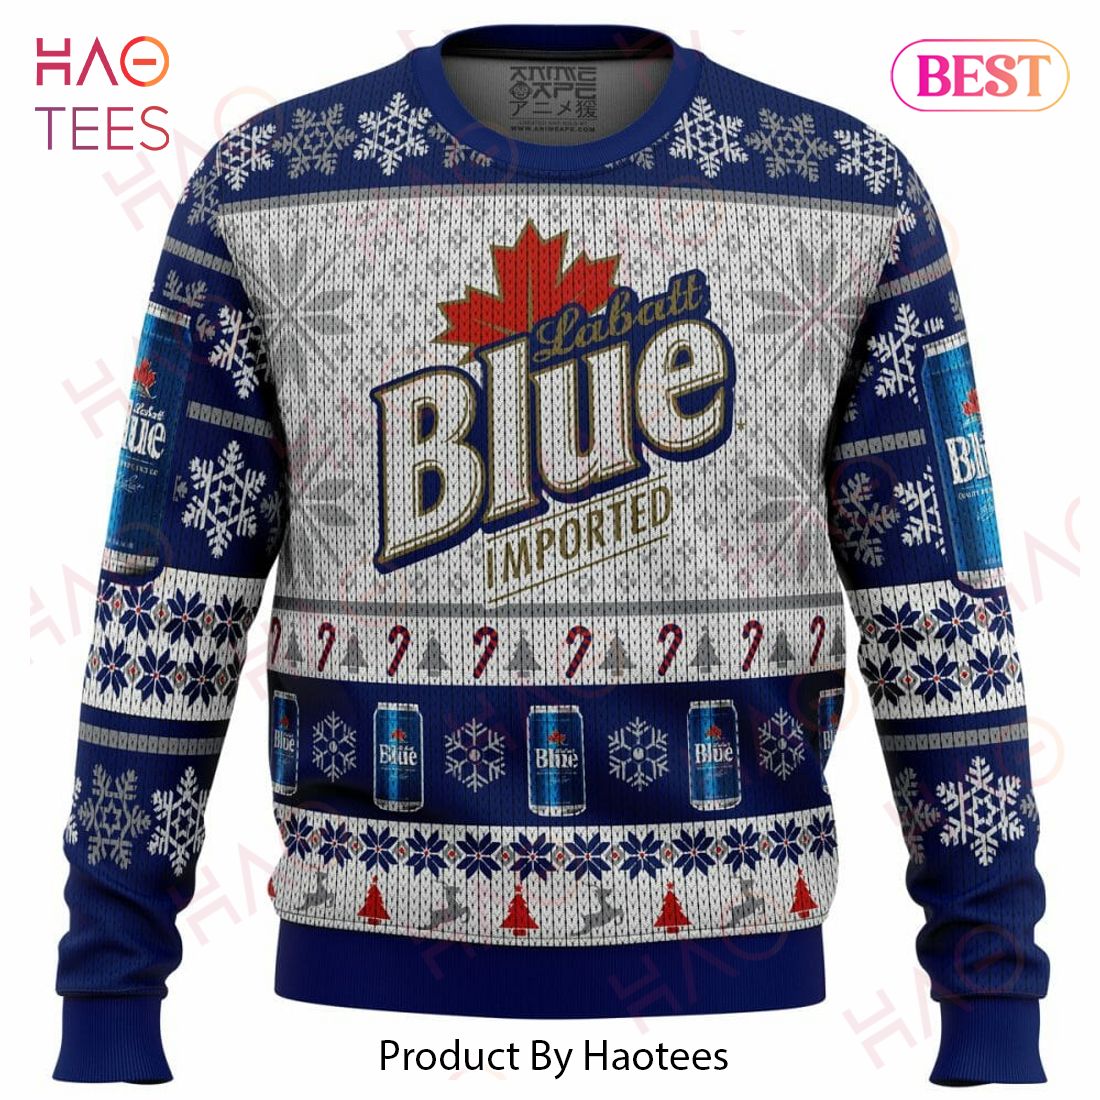 Labatt Blue Ugly Christmas Sweater